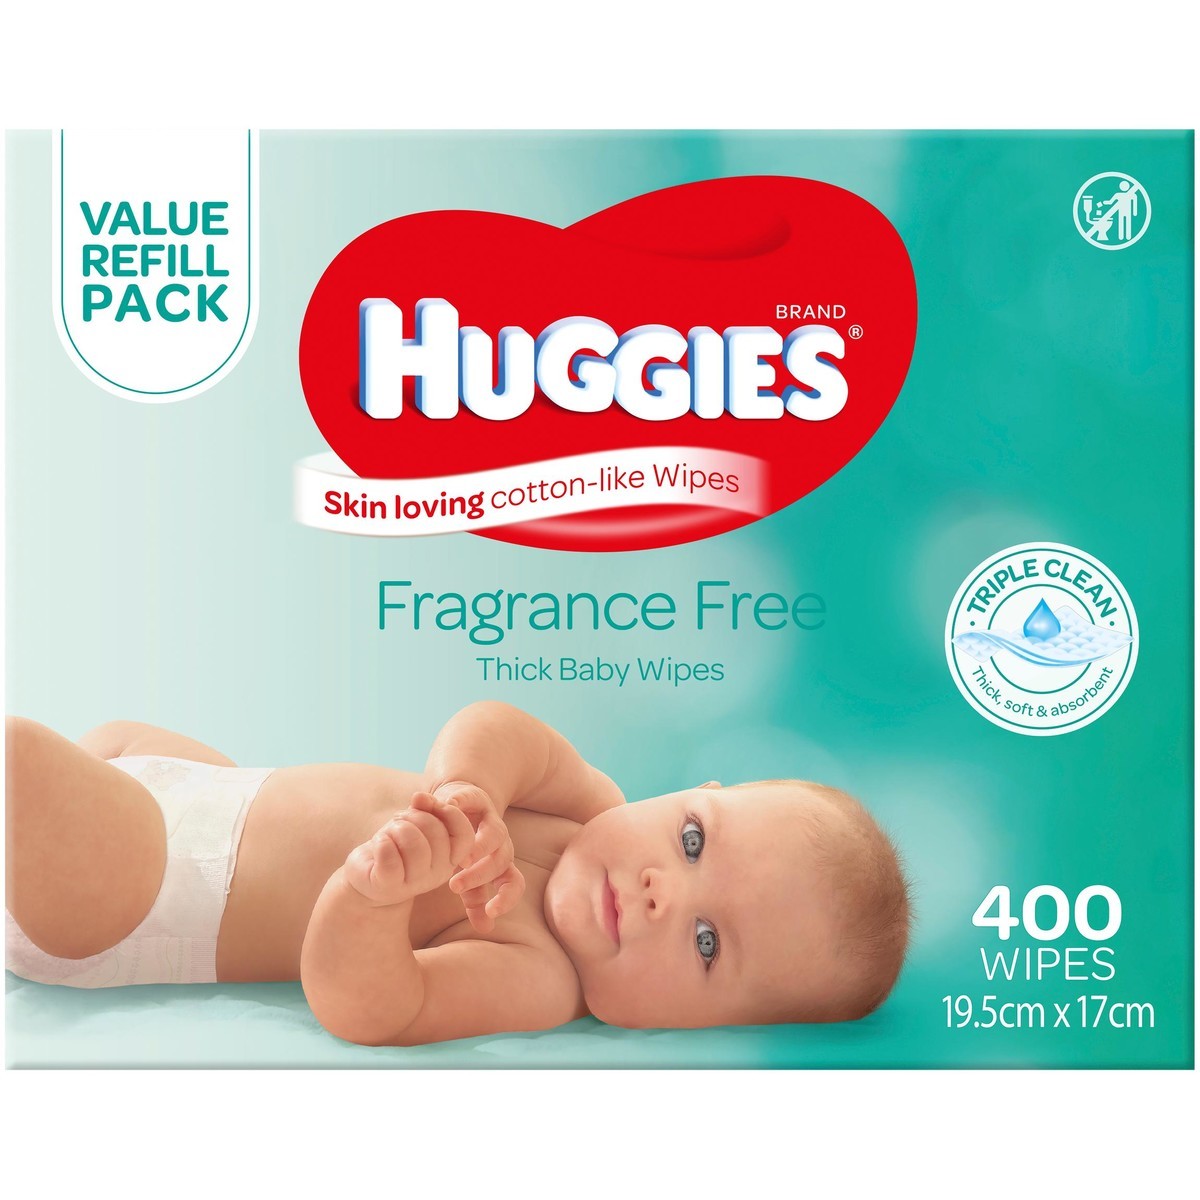 Huggies Fragrance Free Wipes